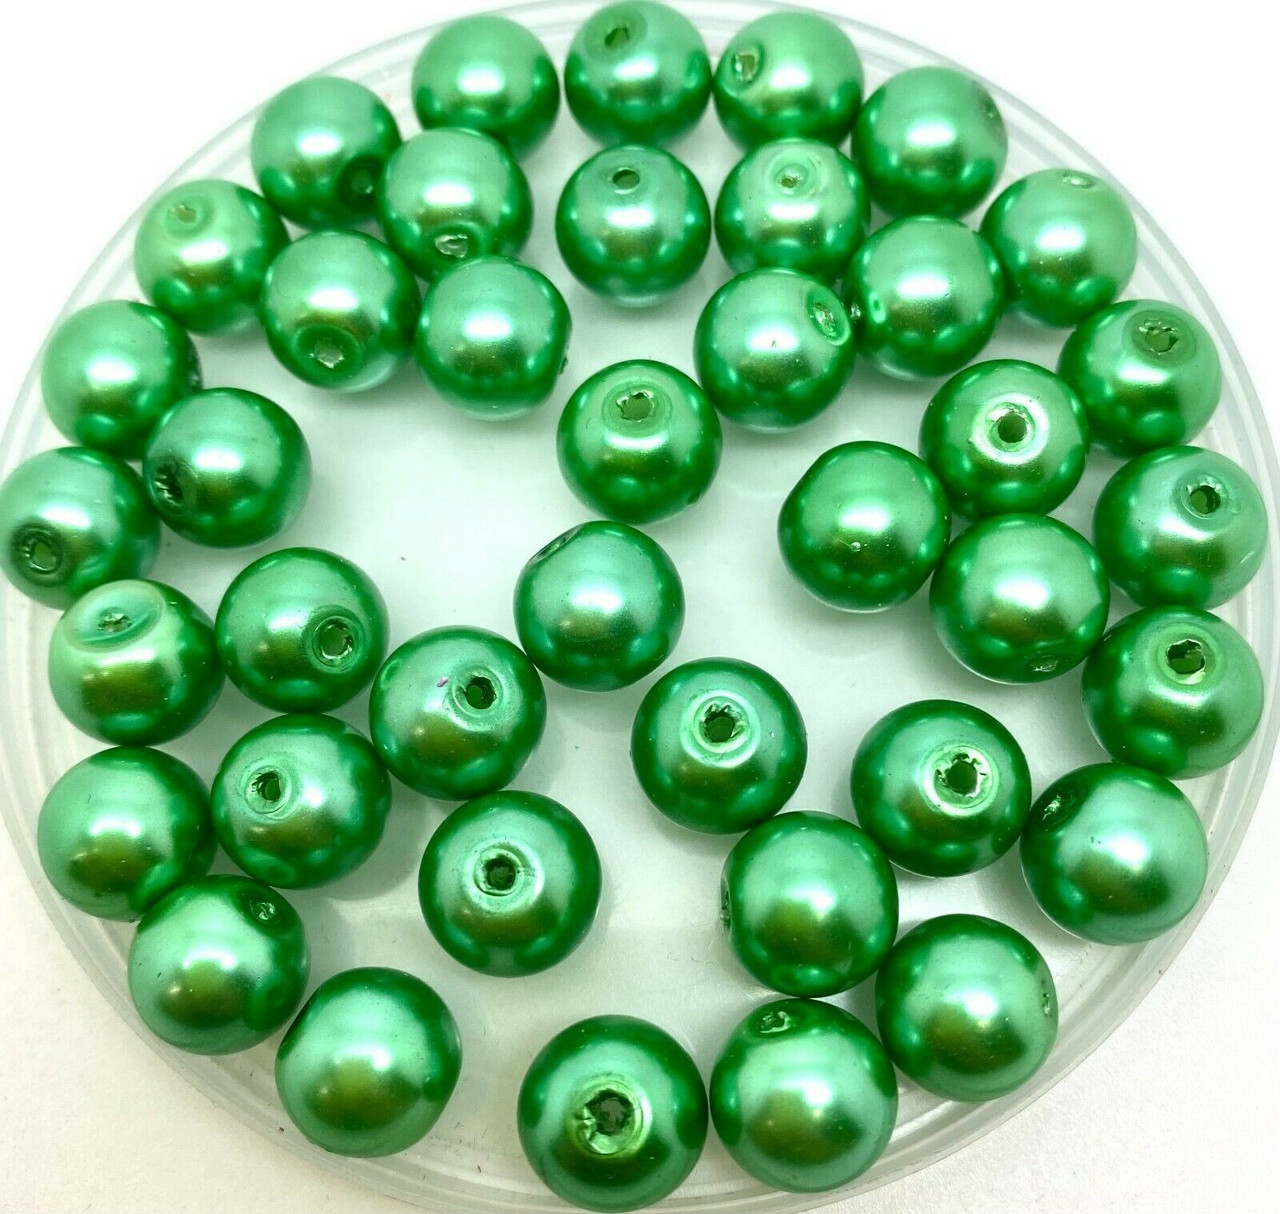 Soft Green 10mm Glass Pearls